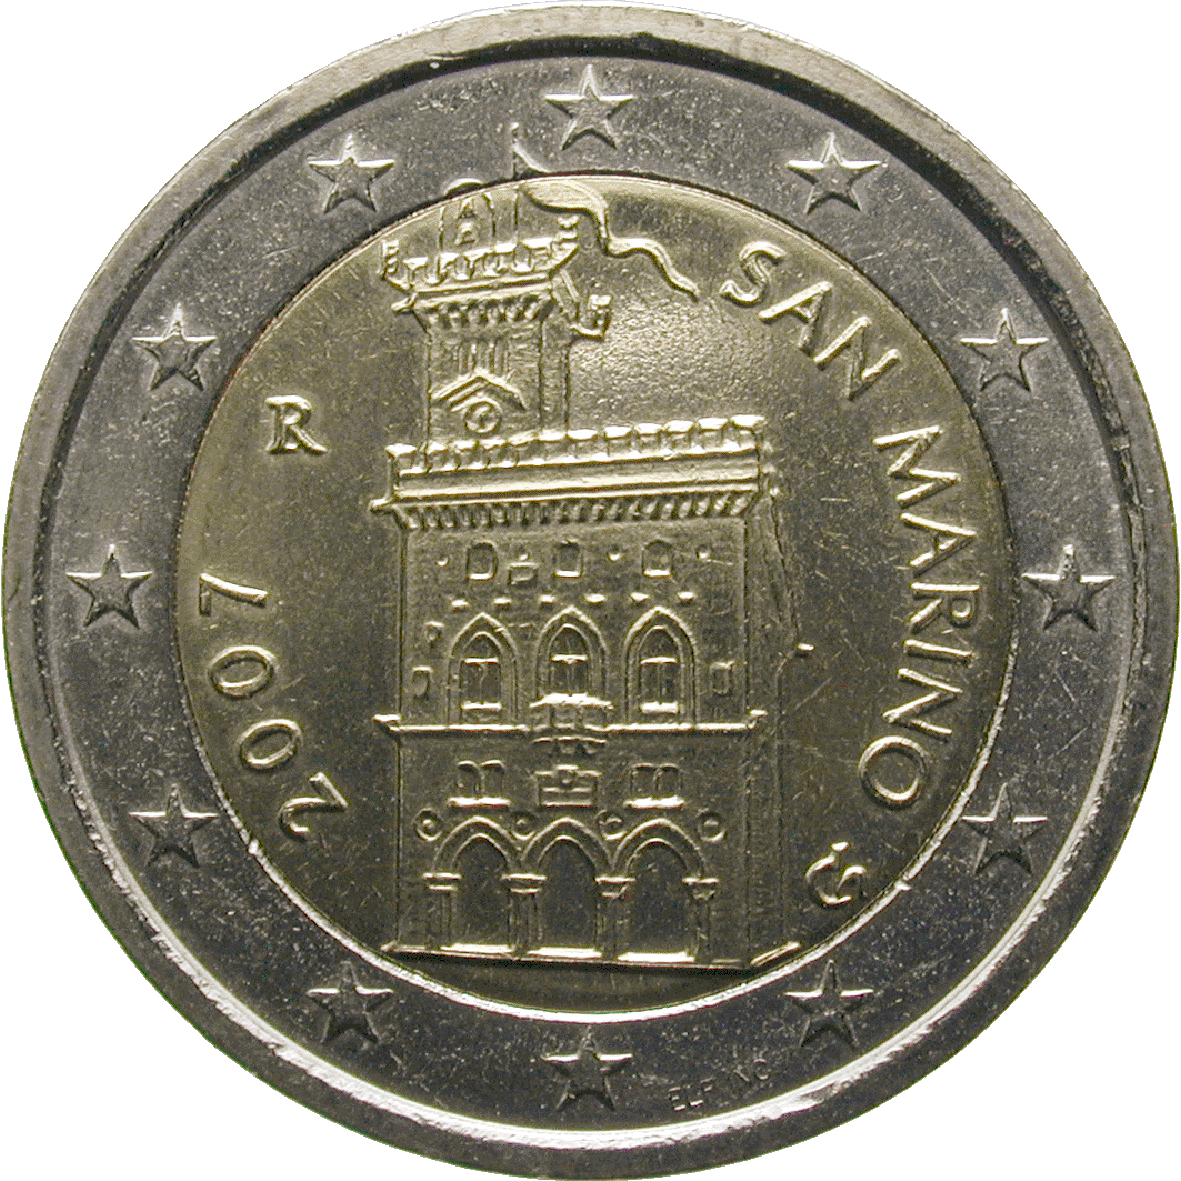 Republik San Marino, 2 Euro 2007 (reverse)